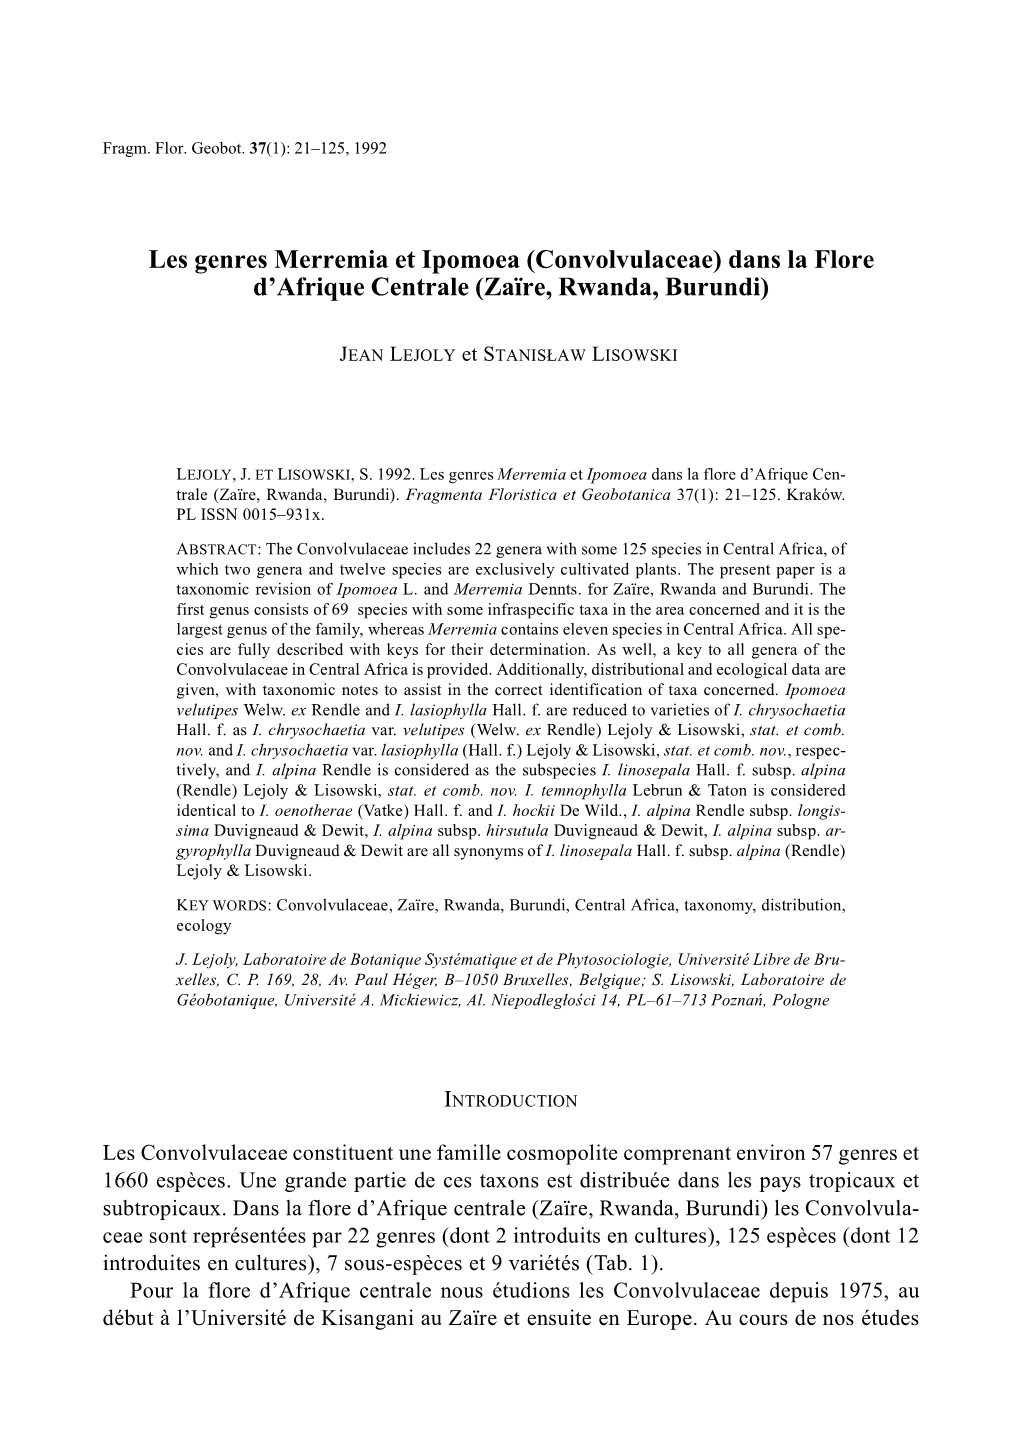 Les Genres Merremia Et Ipomoea (Convolvulaceae) Dans La Flore D’Afrique Centrale (Zaïre, Rwanda, Burundi)